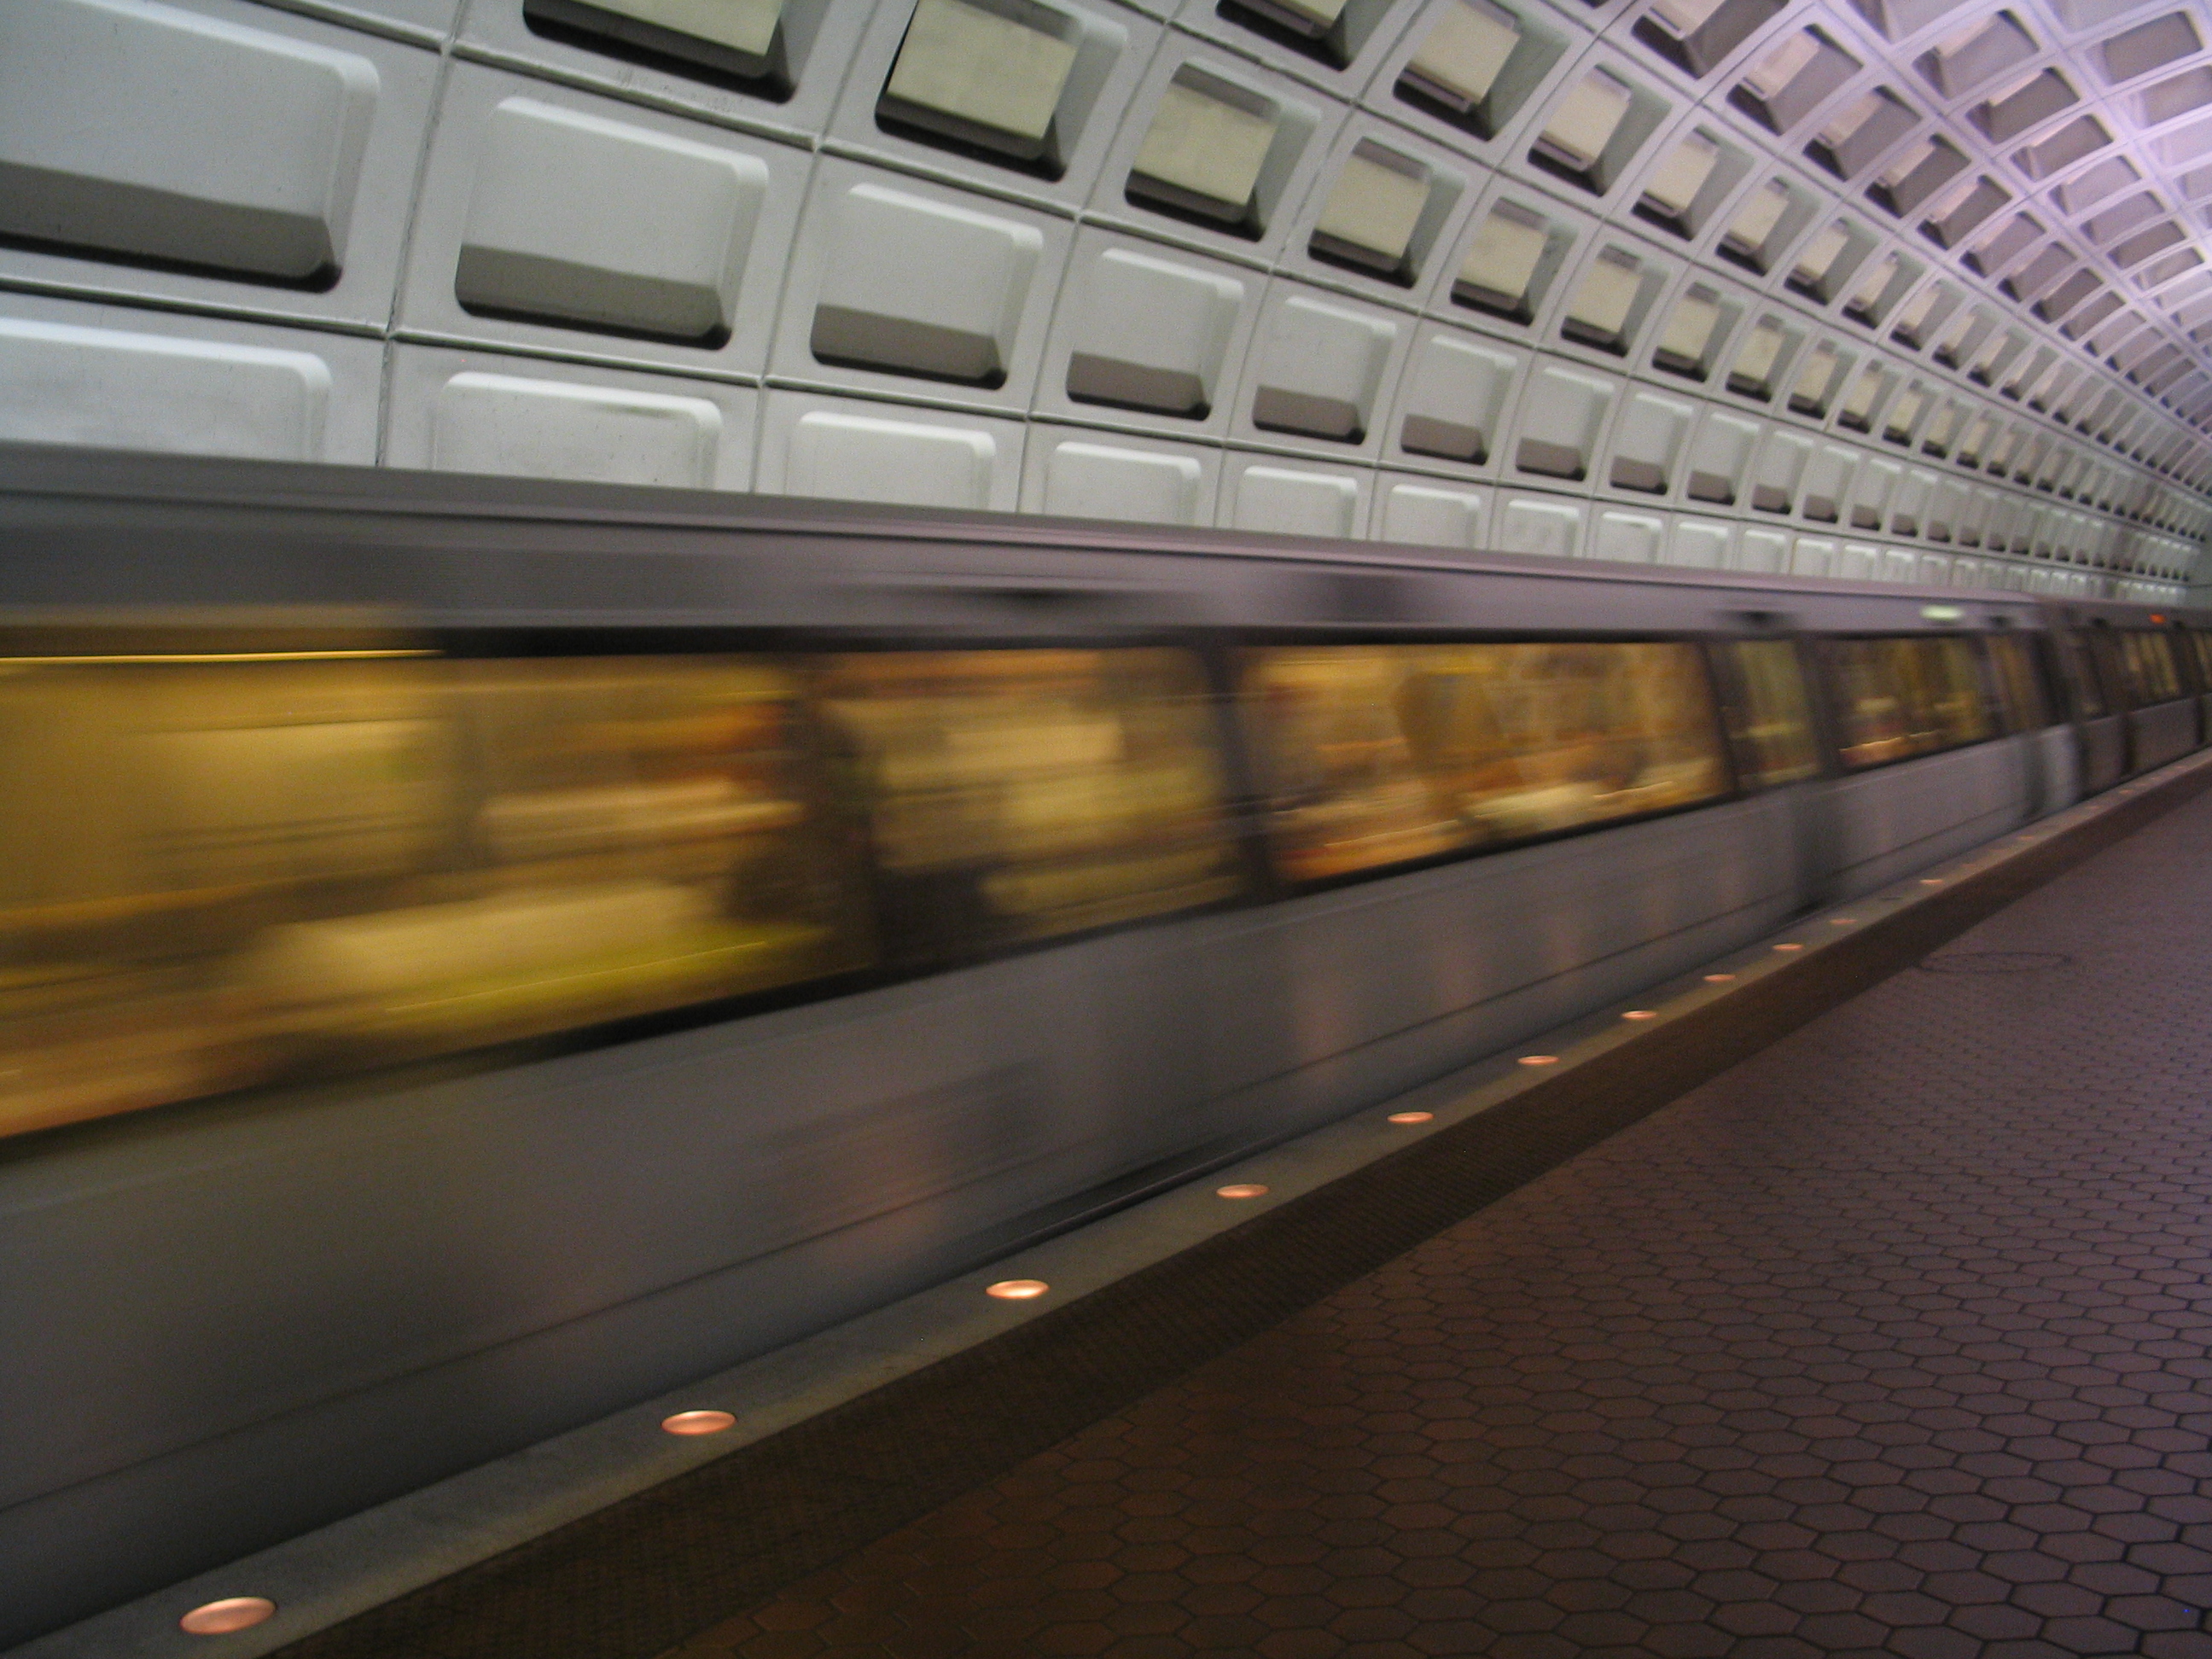 Metro Moving Train